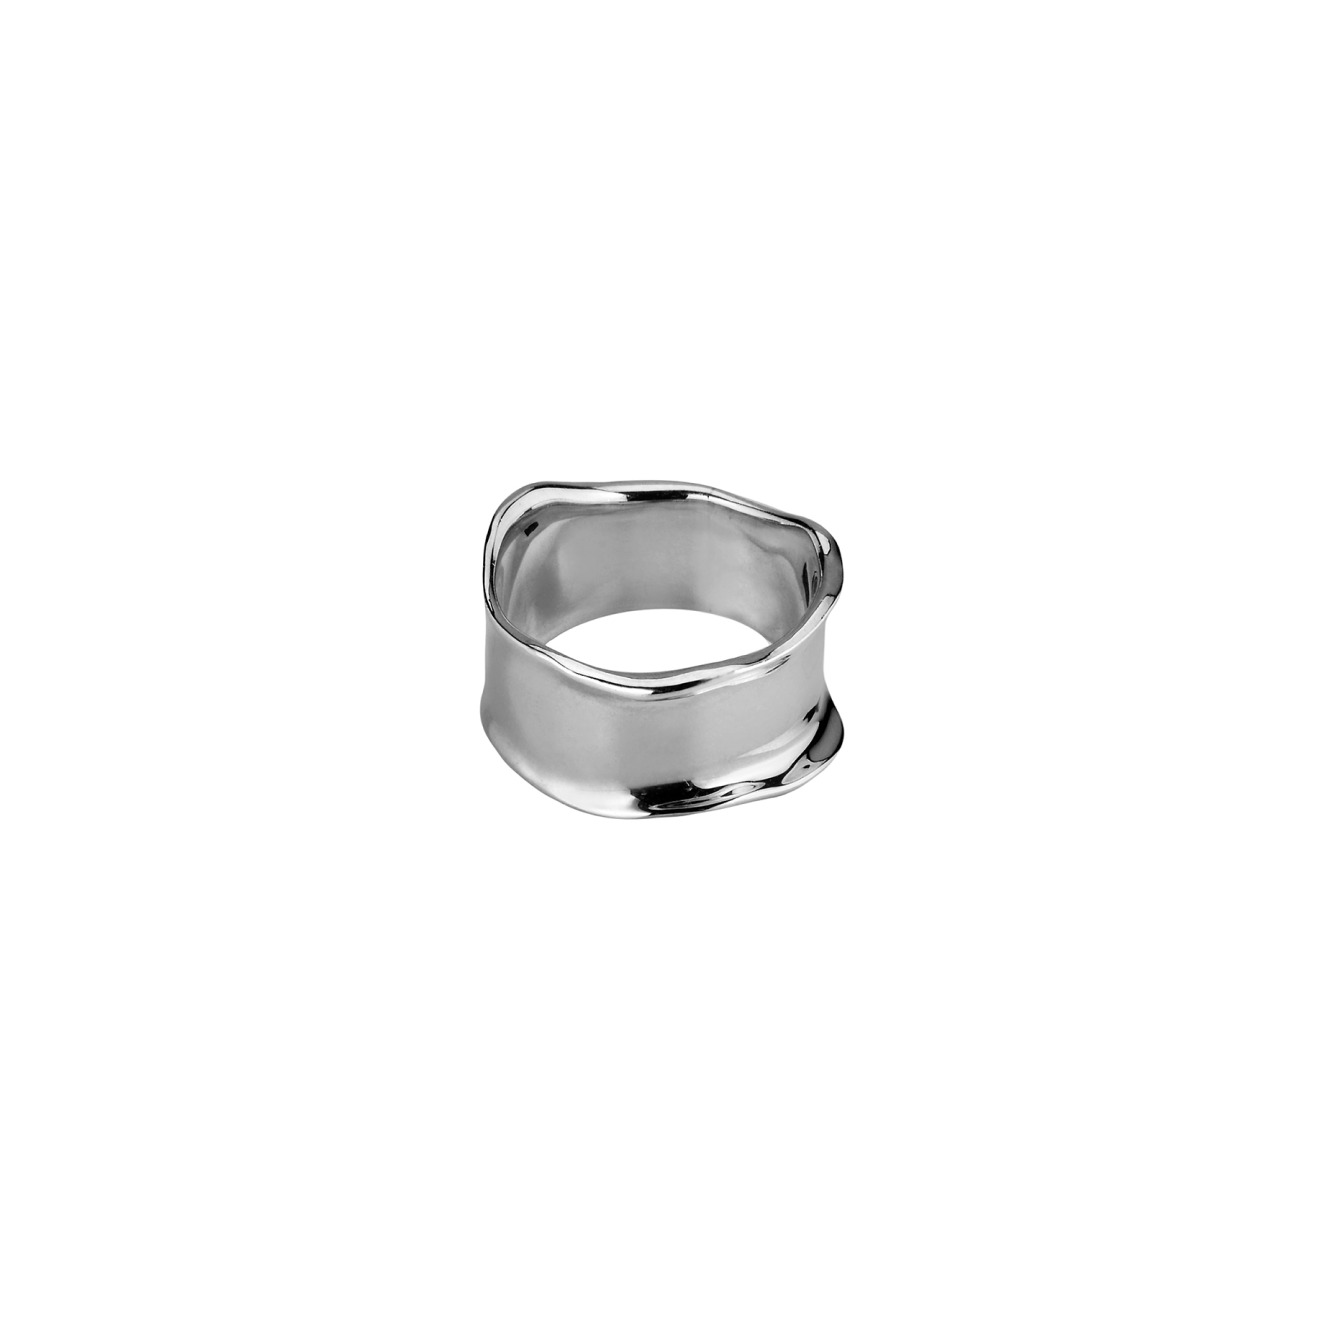 Ms. Marble Широкое кольцо из серебра Sixth Sense фужер серебро 925